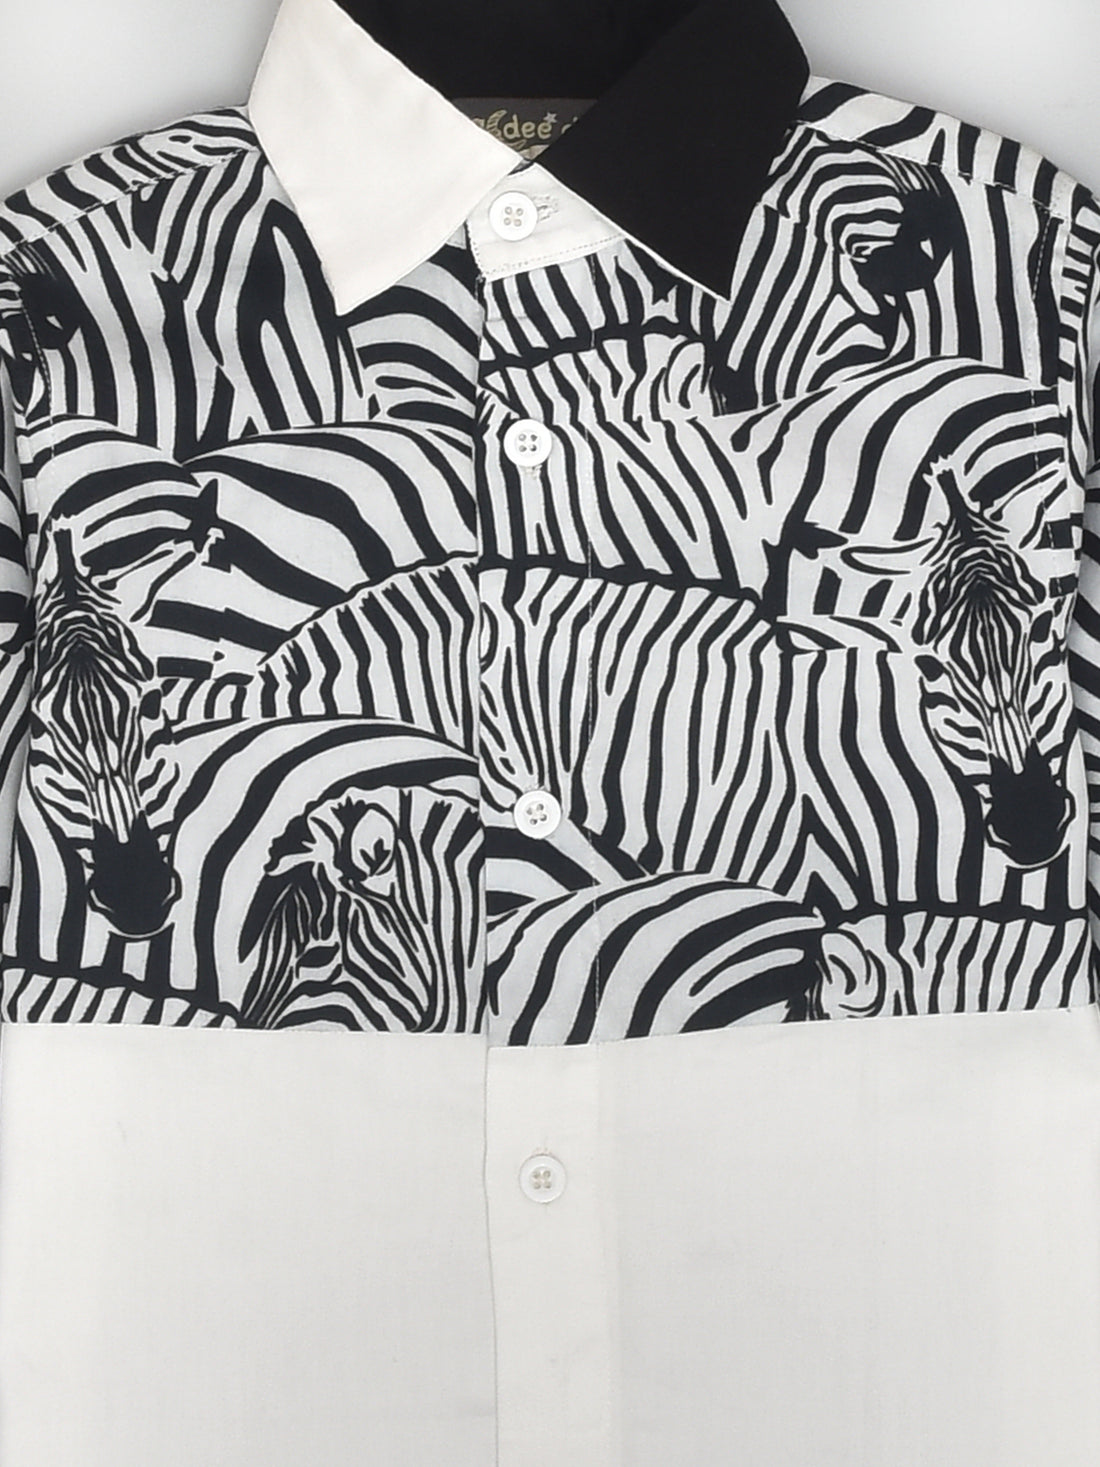 Zebra Printed White Full Sleeve Shirt and Black Shorts Travel Set for Boys